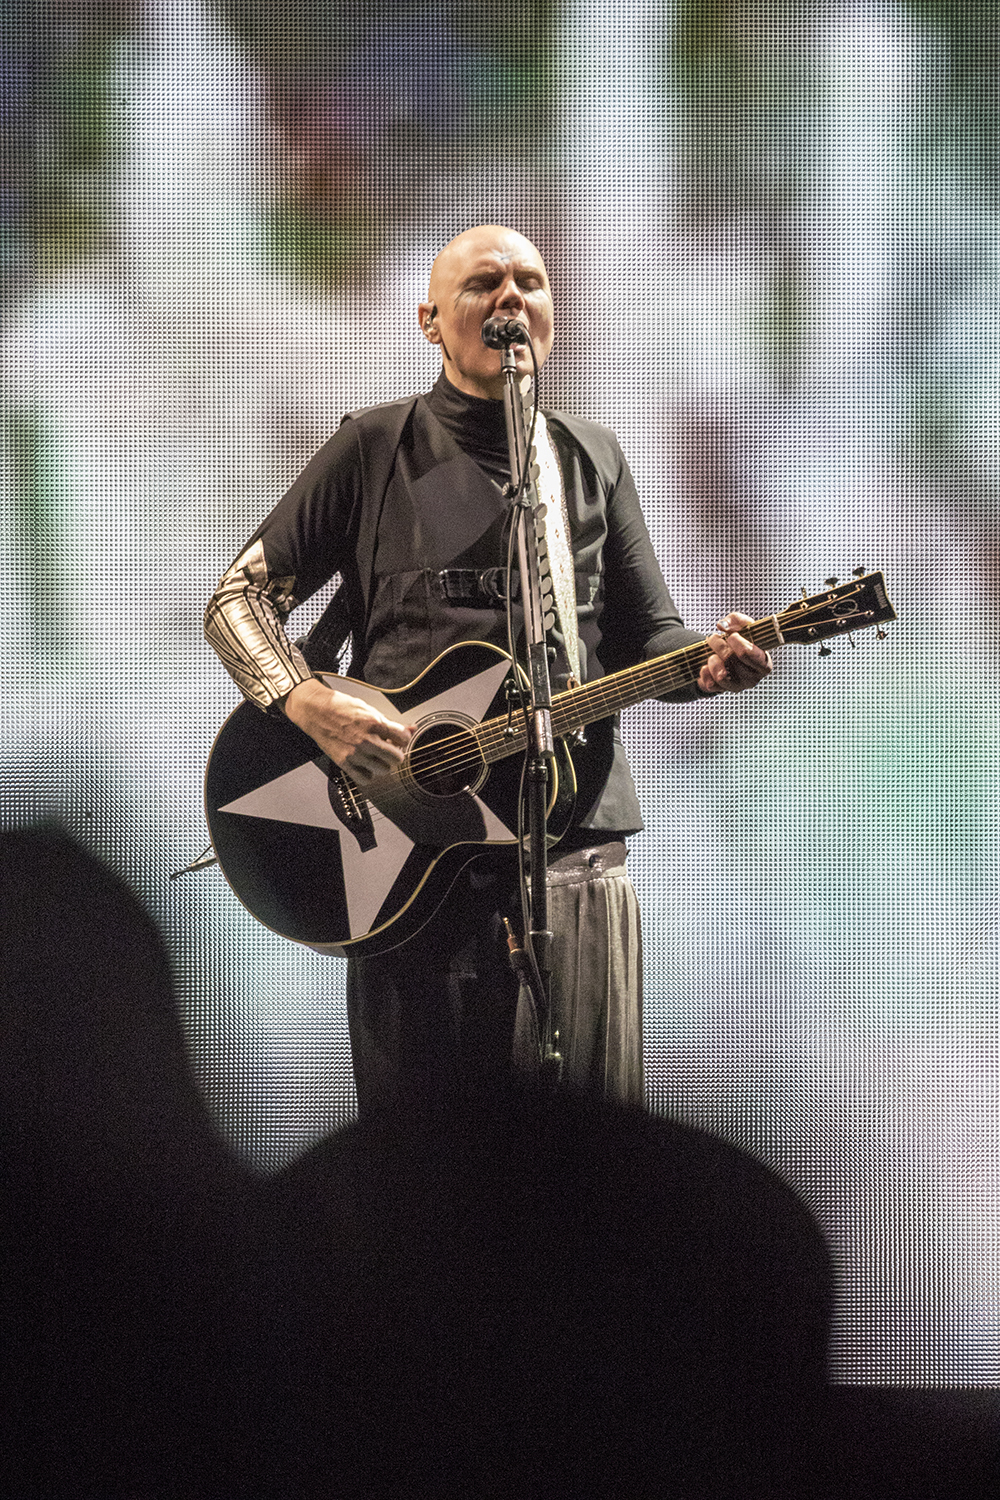 Billy Corgan plays guitar